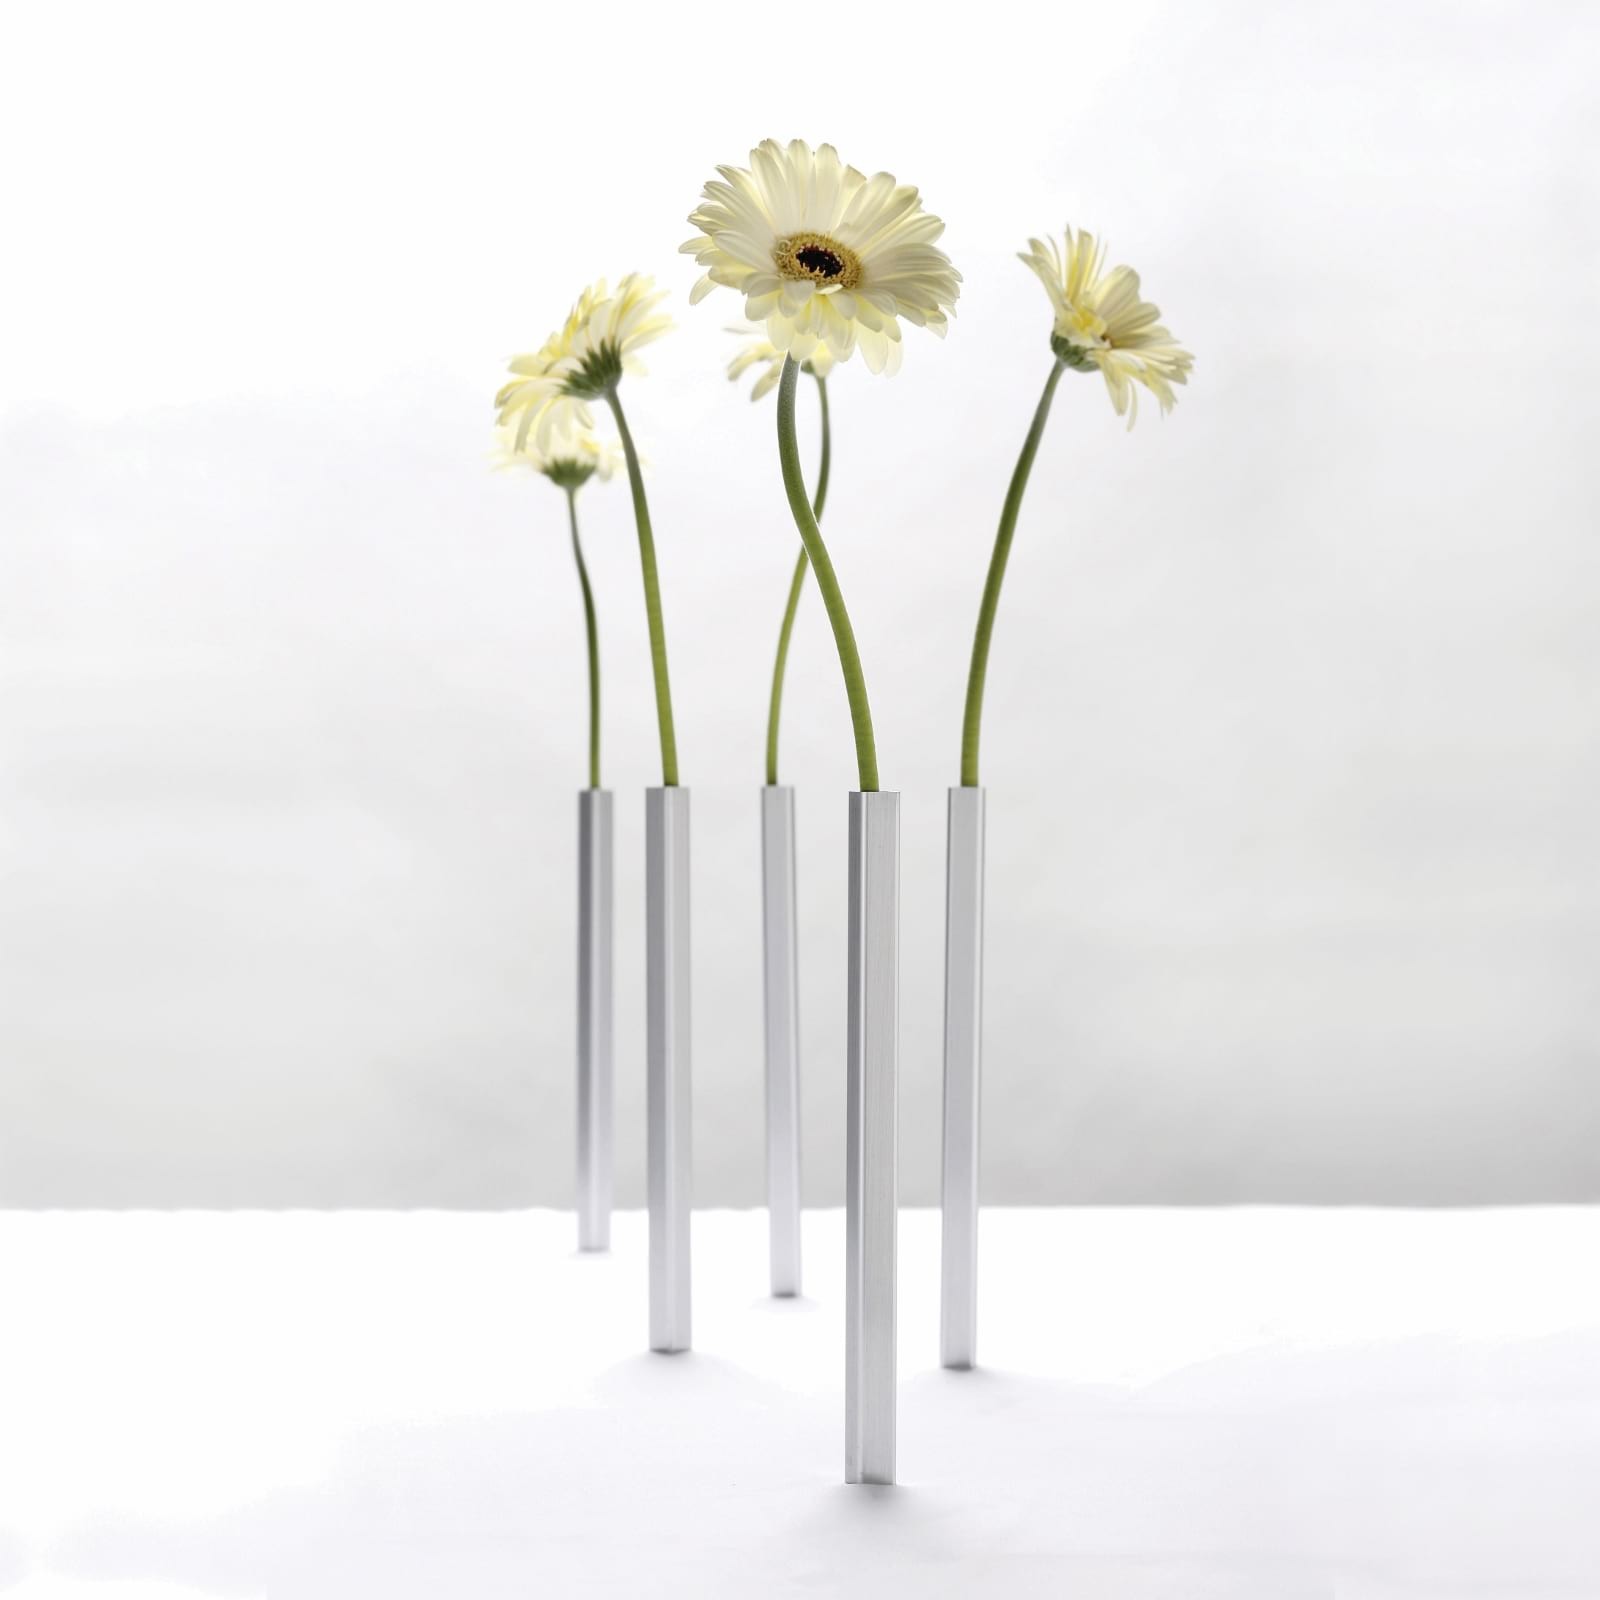 5 Magnetic Flower Vases Peleg Design DCI Centerpiece Lot Modern Home Decor 